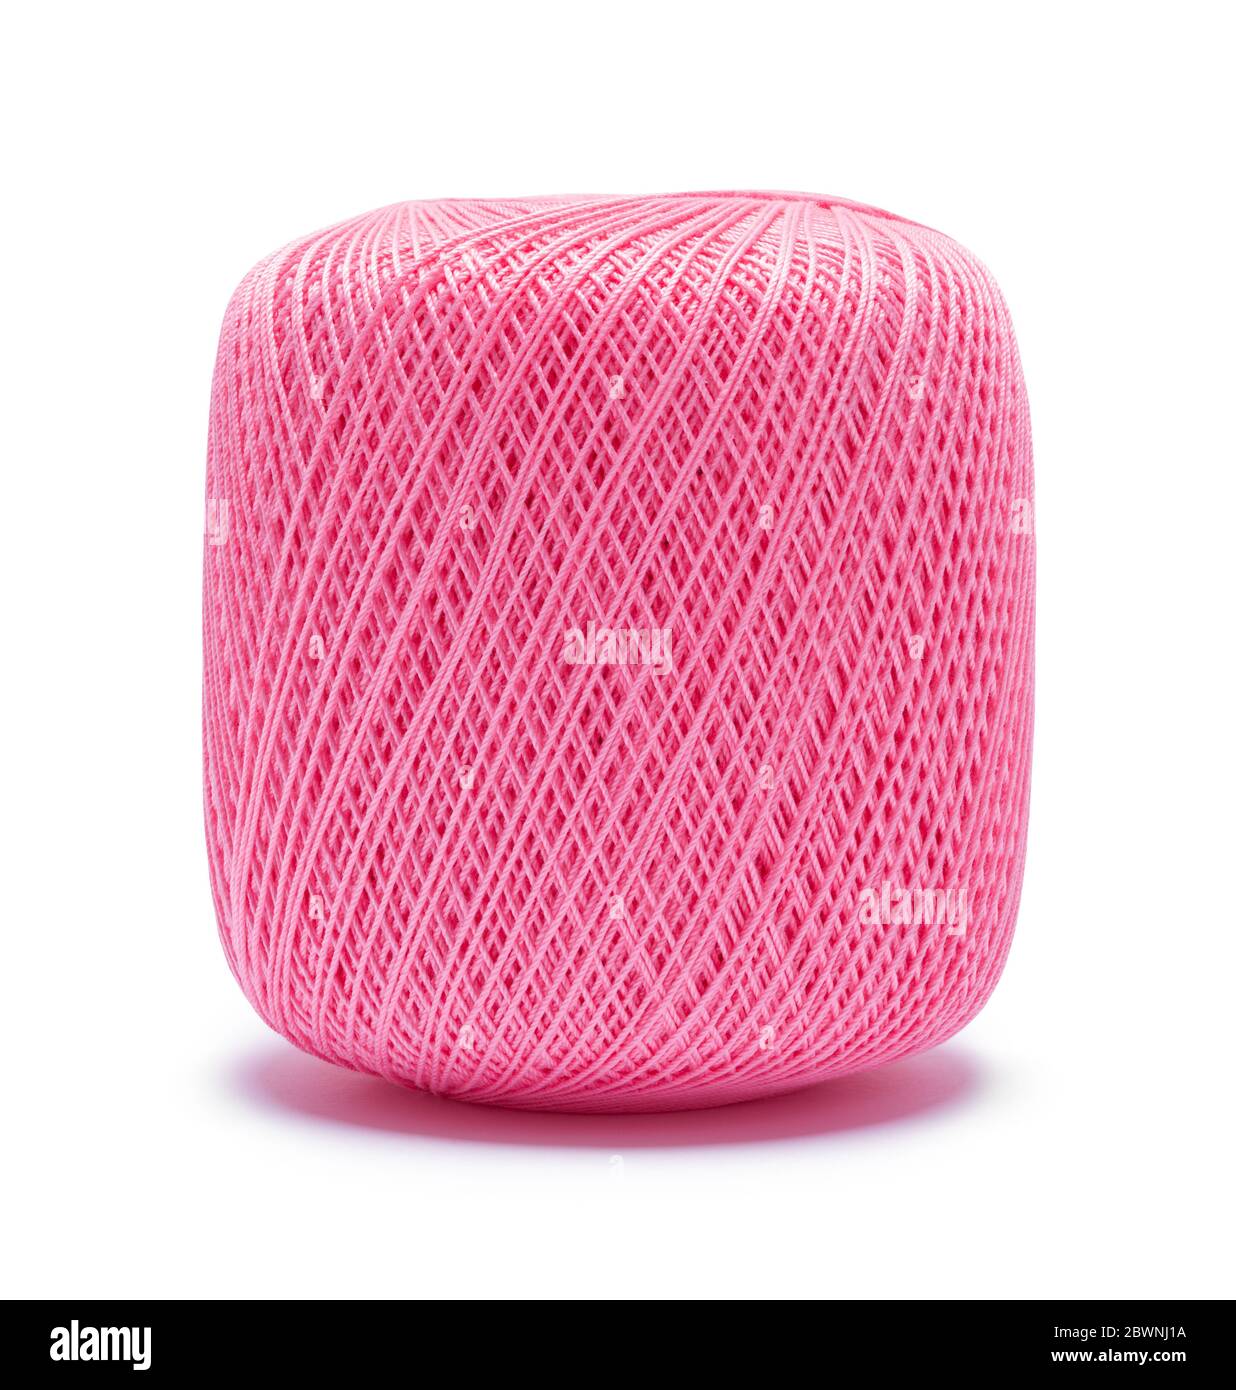 Bobina de cuerda de punto rosa aislada en fondo blanco. Foto de stock